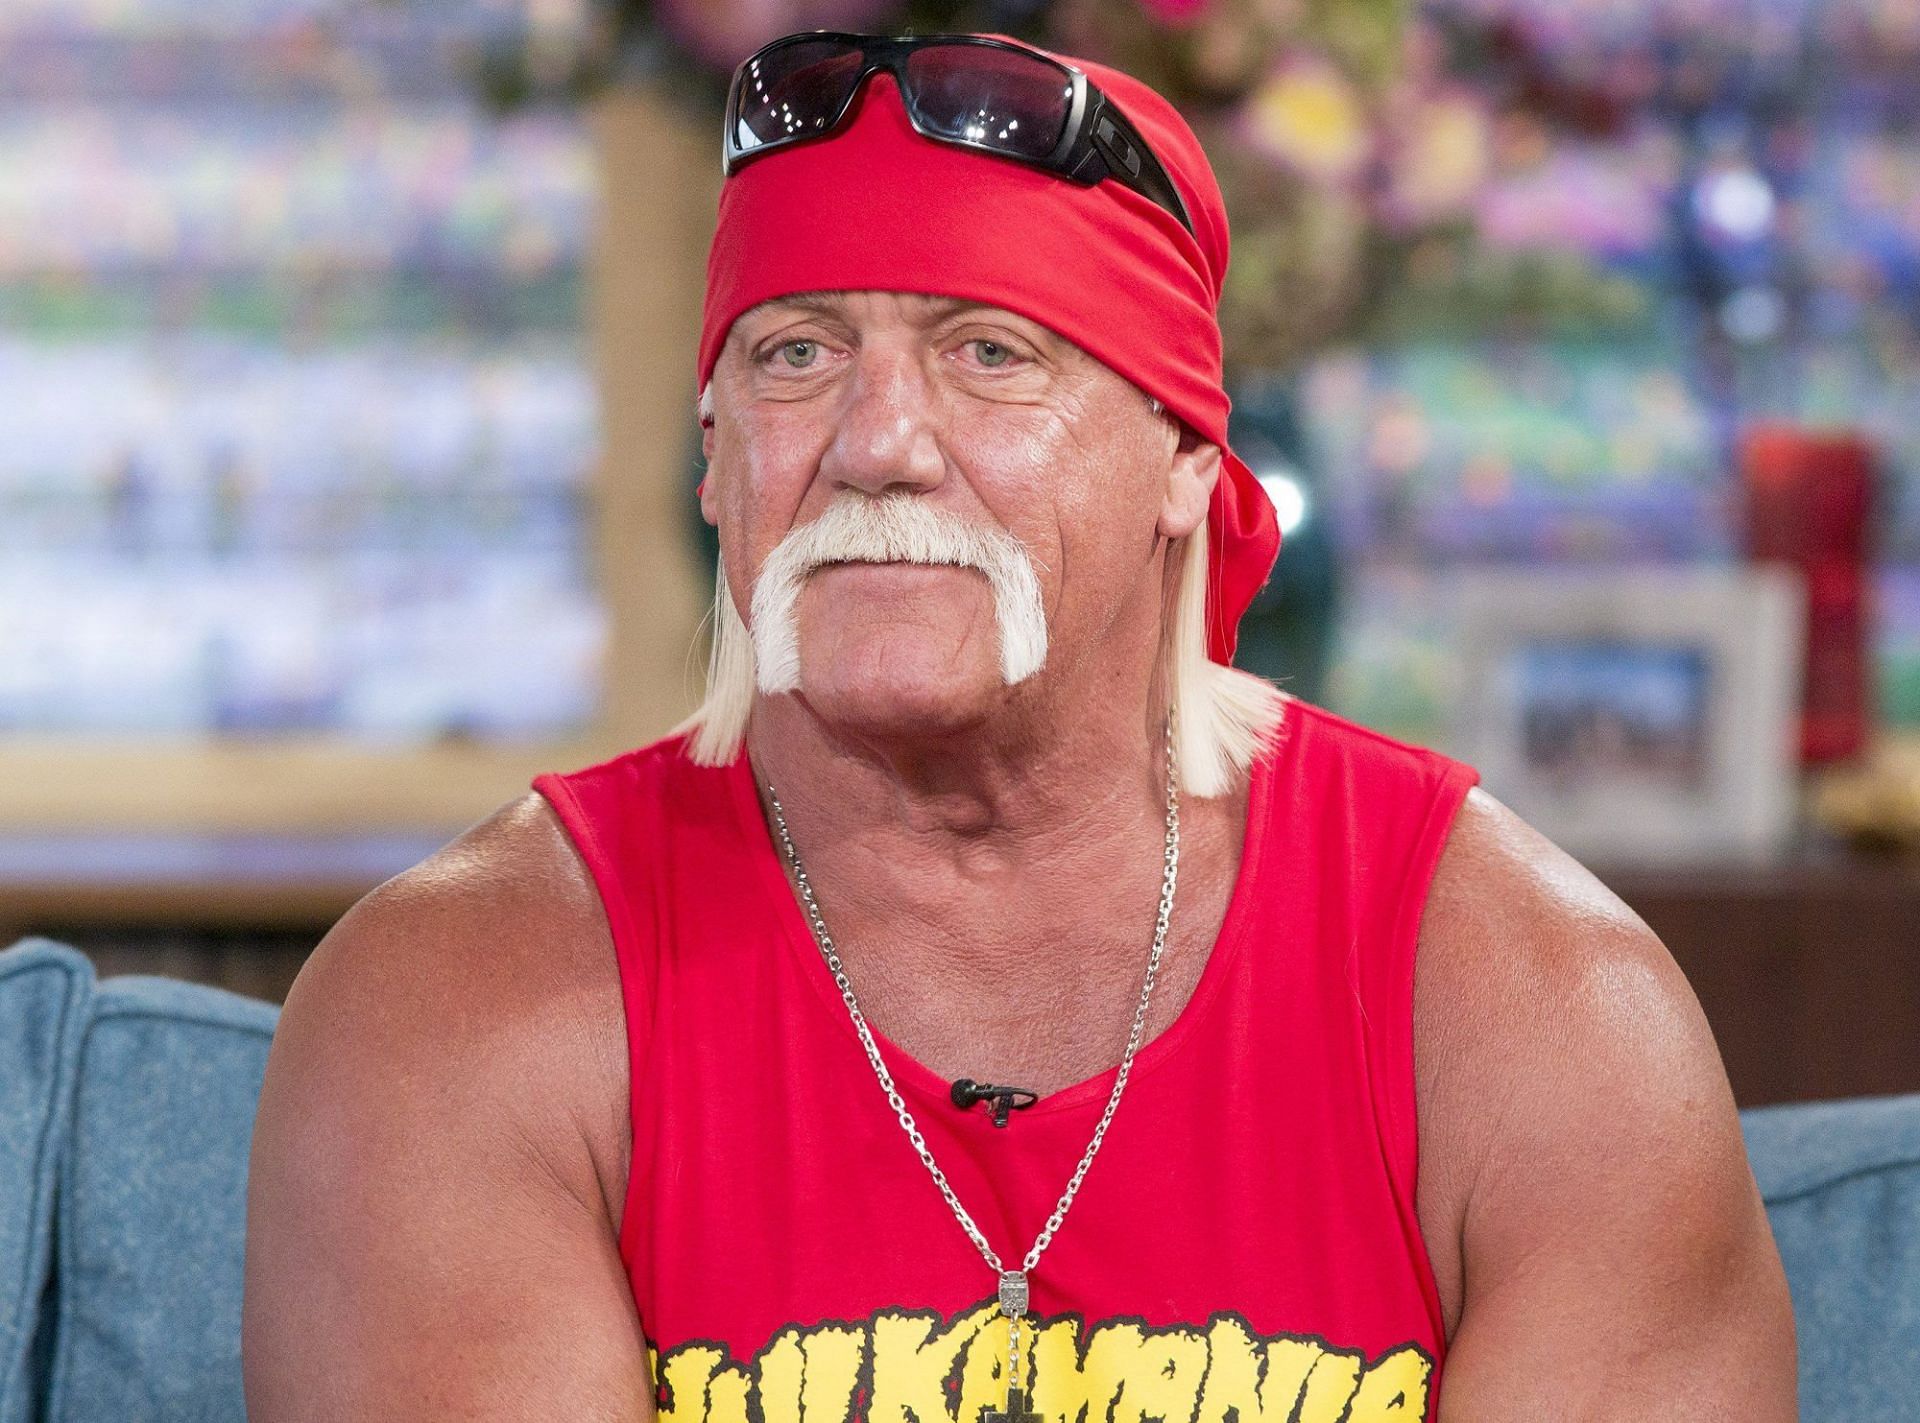 WWE Hall of Famer and former champion Hulk Hogan